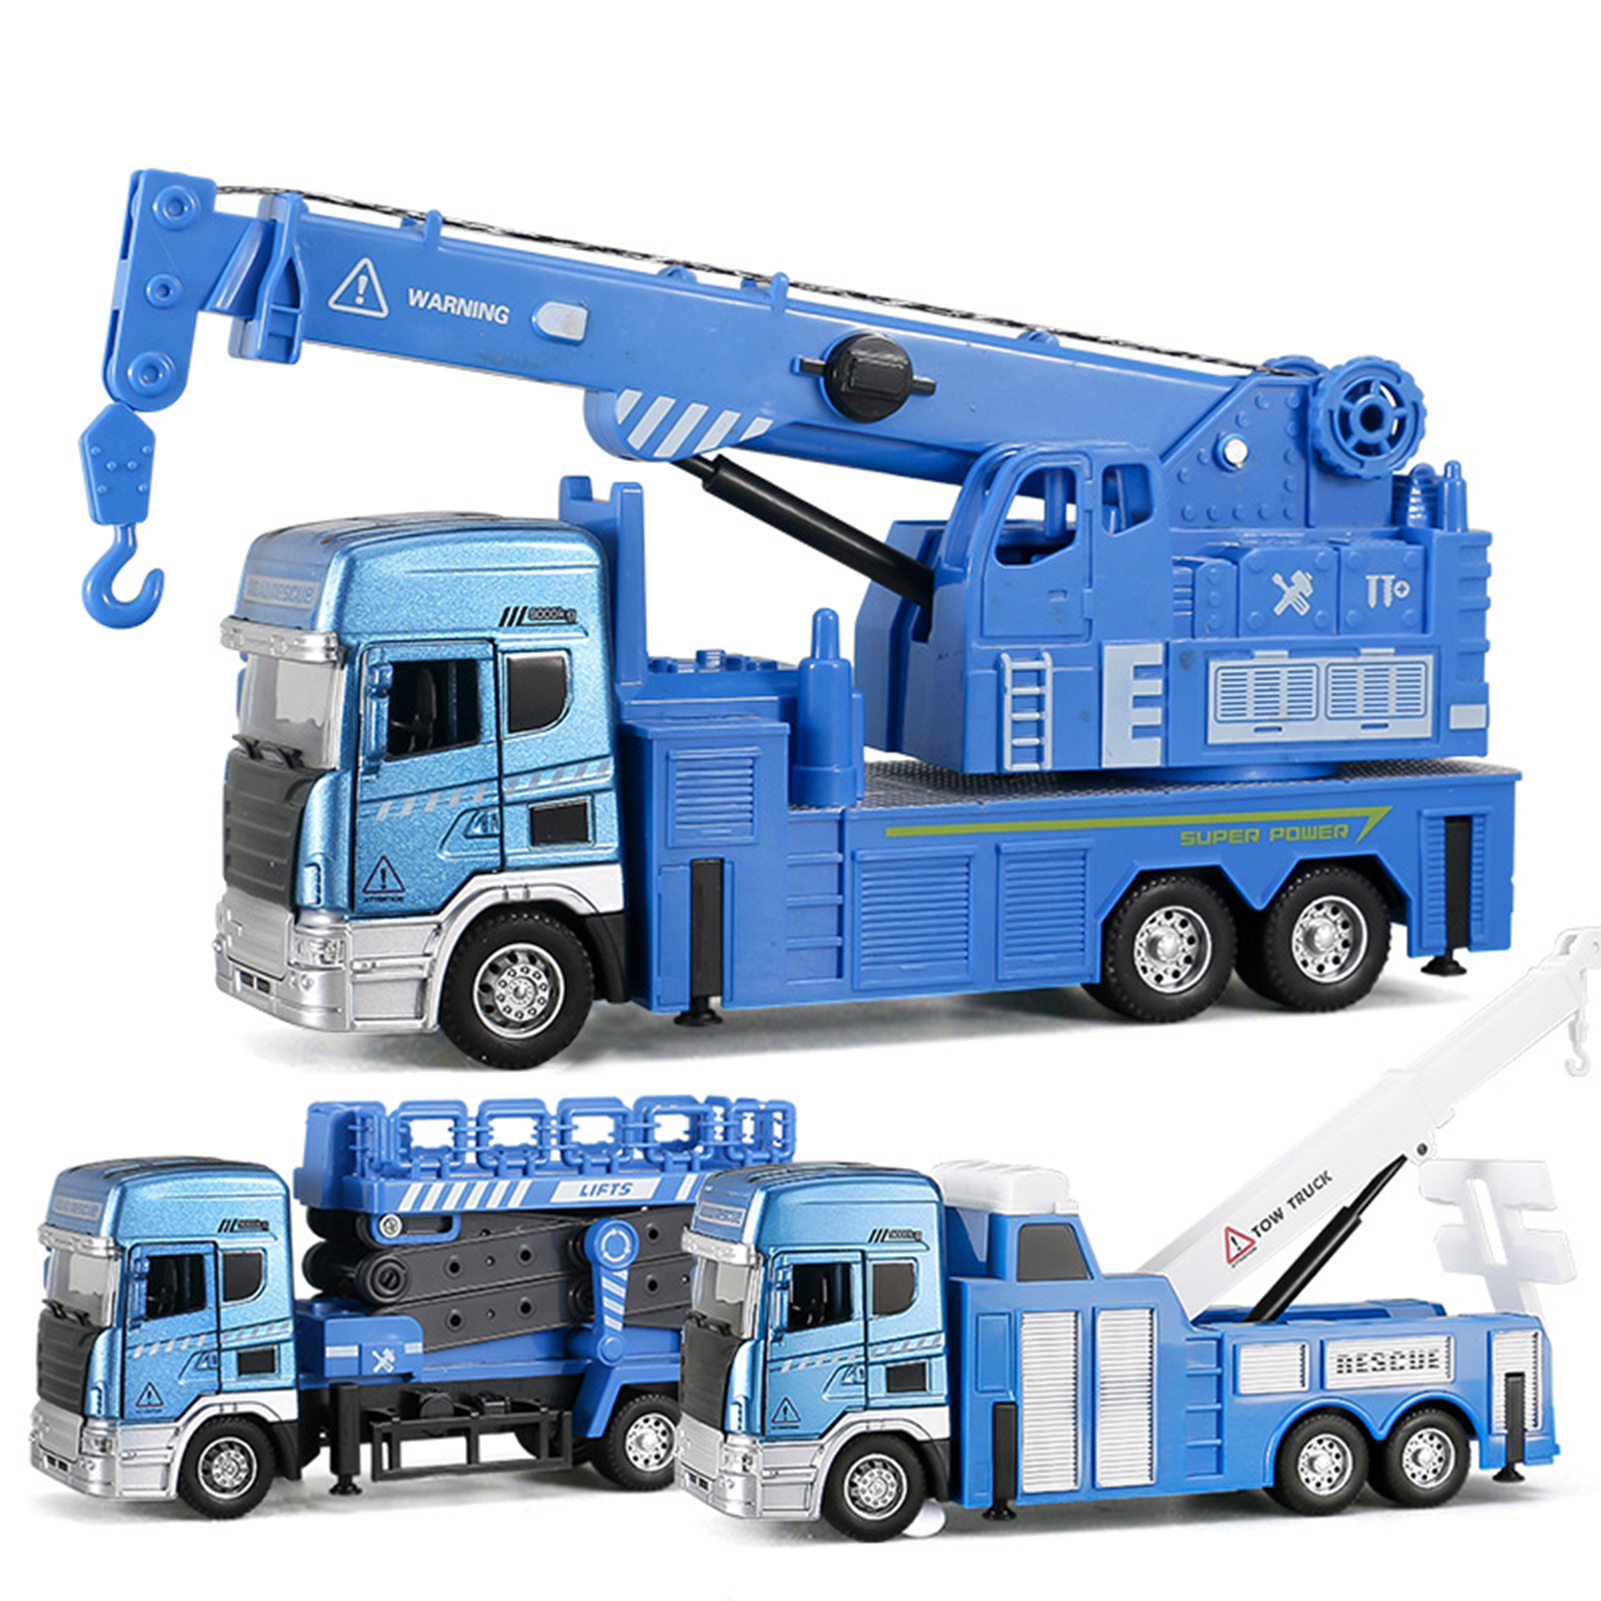 Happy Date Construction Vehicles Truck Toys, Engineering Truck Die Cast Alloy Truck Head, Tractor Trailer Excavator Dump Loader Cement Forklift Sandbox Gift - image 1 of 9